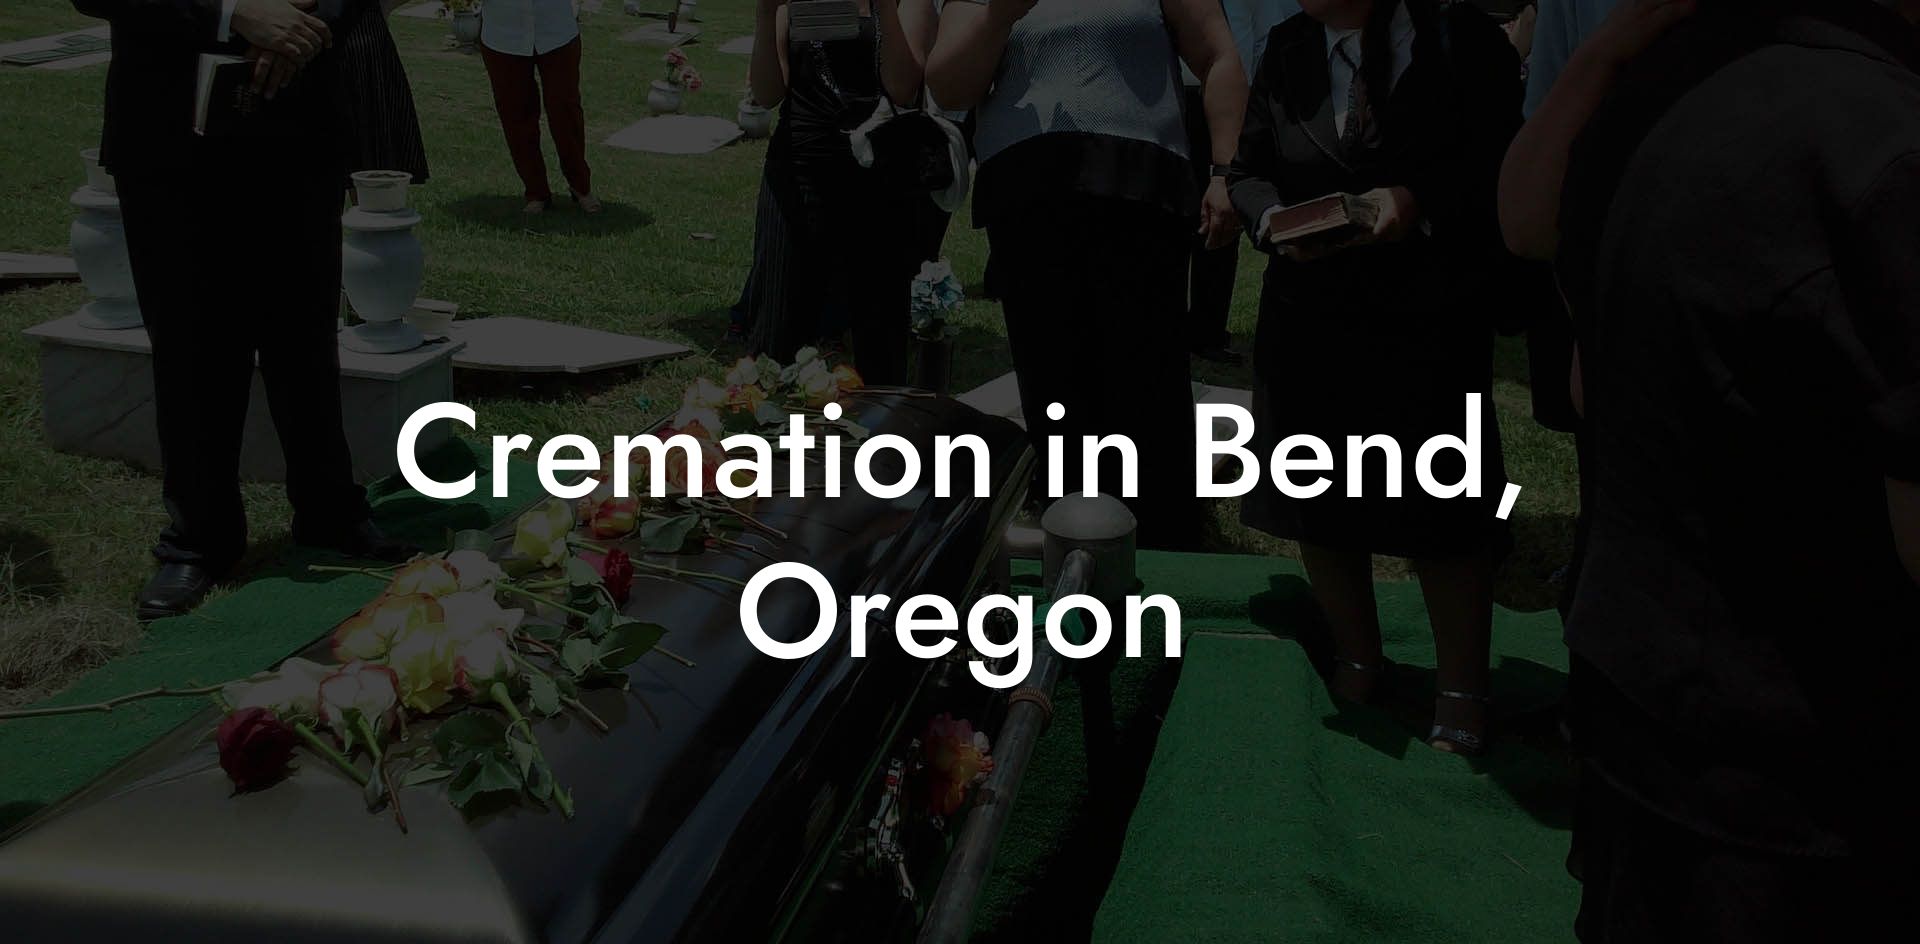 Cremation in Bend, Oregon